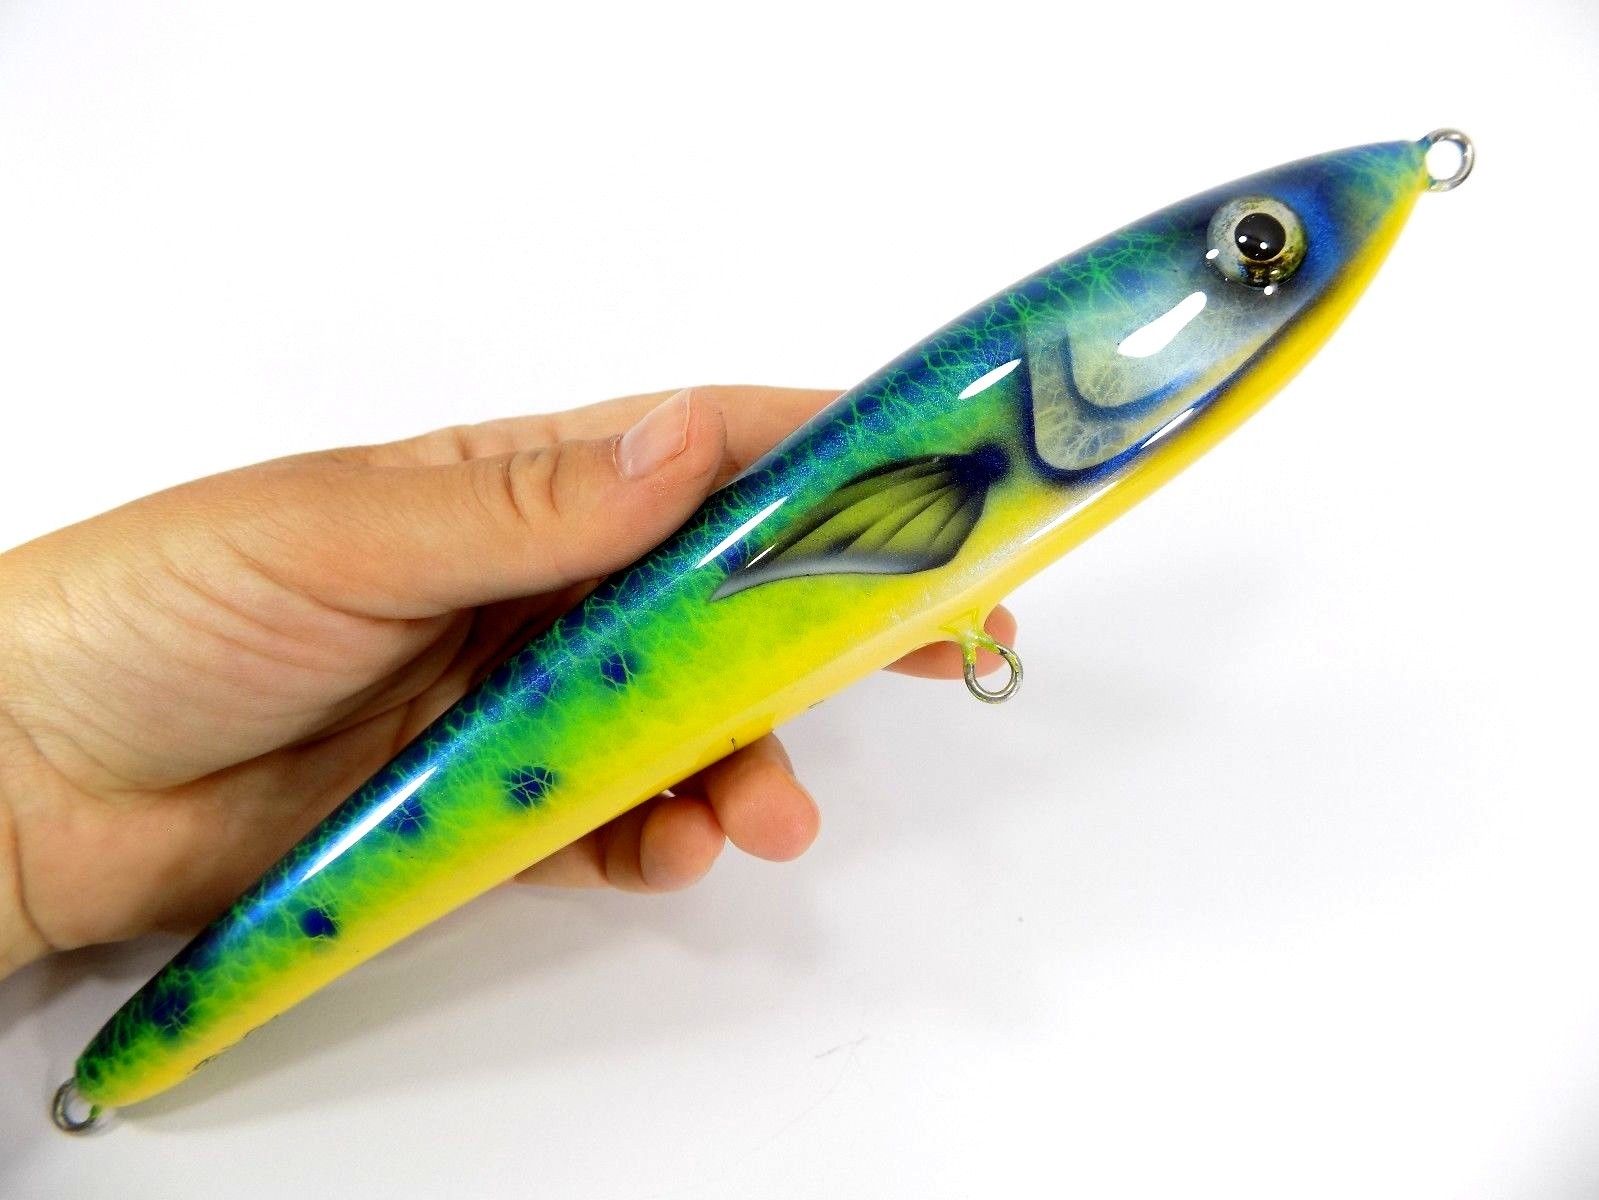 https://www.megaluresml.com/wp-content/uploads/2018/05/Game-Fishing-Mega-Lures-Mackerel-Tuna-Marlin-Mahi-Mahi-Handmade-with-dots.jpg